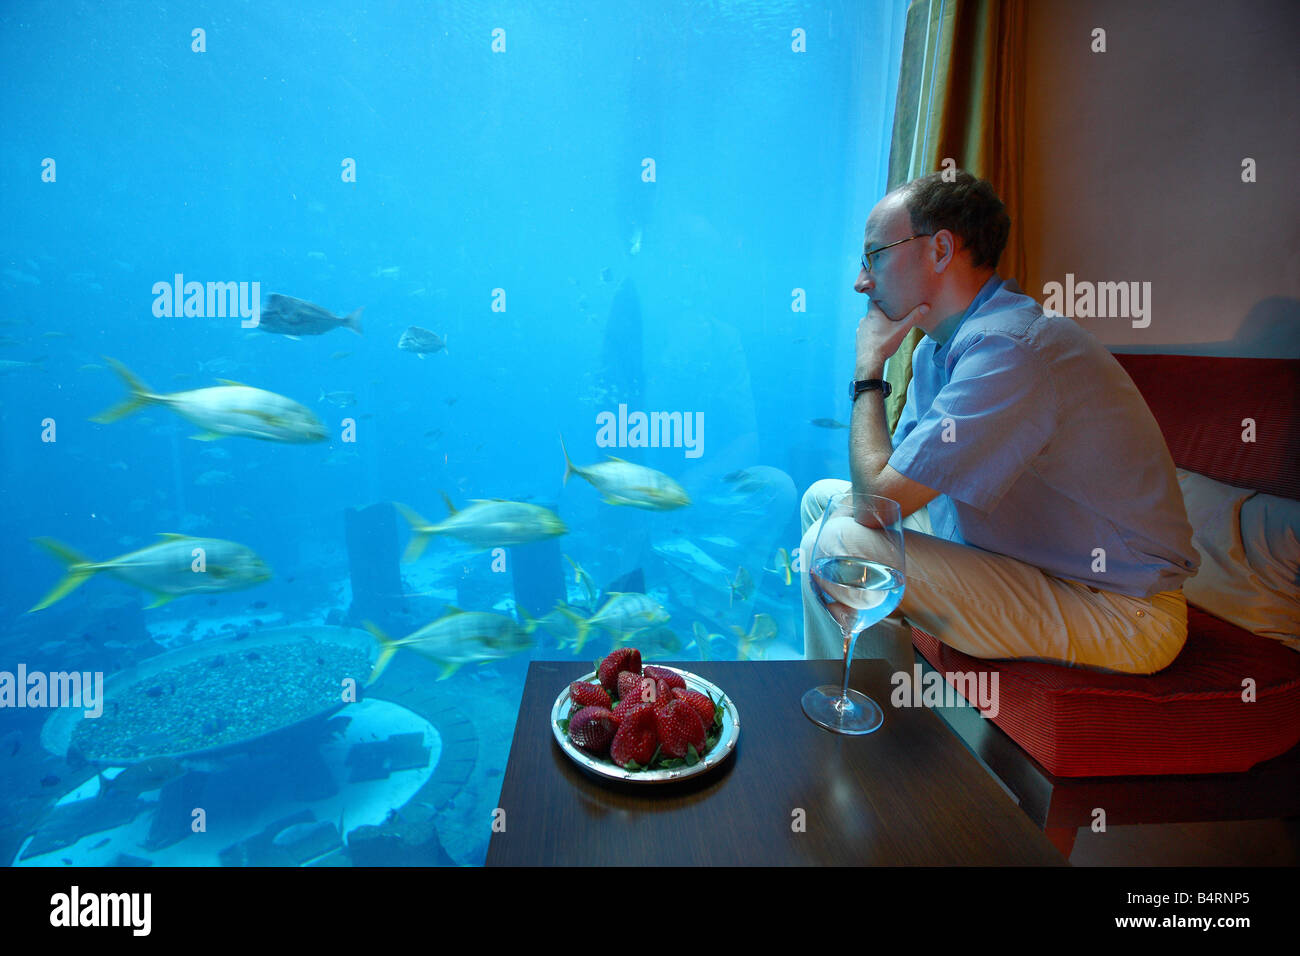 Hotel Atlantis, The Palm, Dubai, Vereinigte Arabische Emirate. Unterwasser-Hotel-Suite mit Blick auf Ambassadro Lagune, Aquarium. Stockfoto